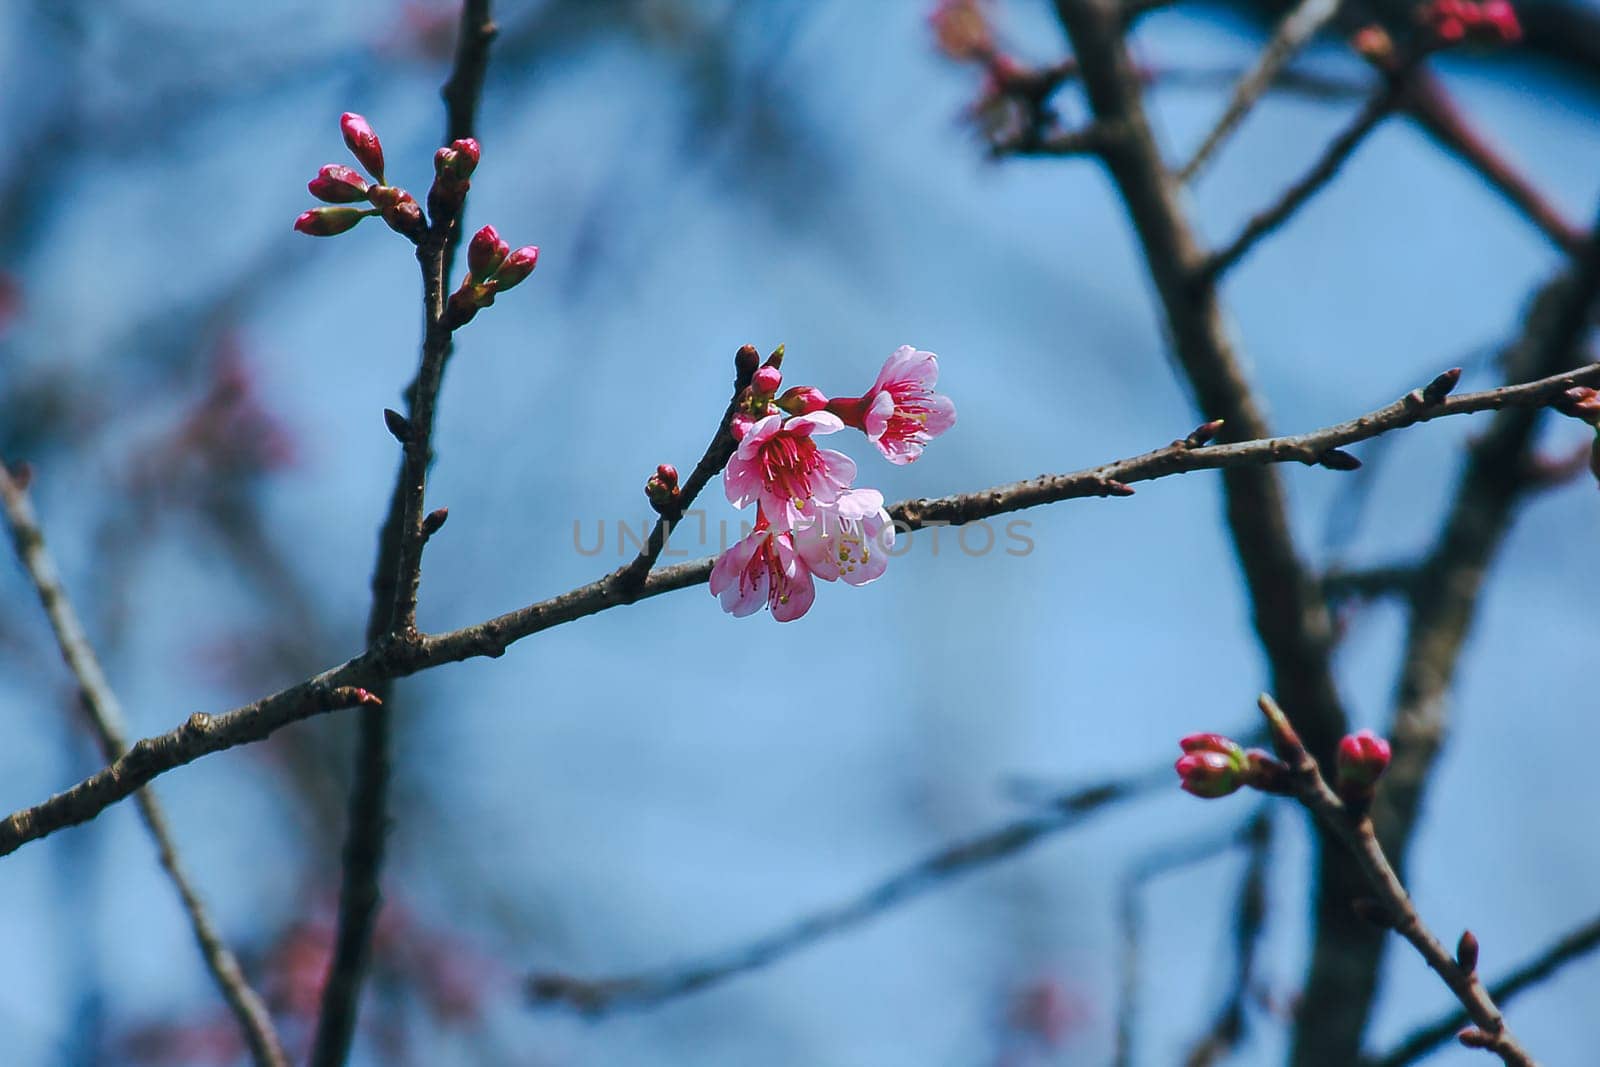 Prunus cerasoides that bloom beautifully in nature. by Puripatt